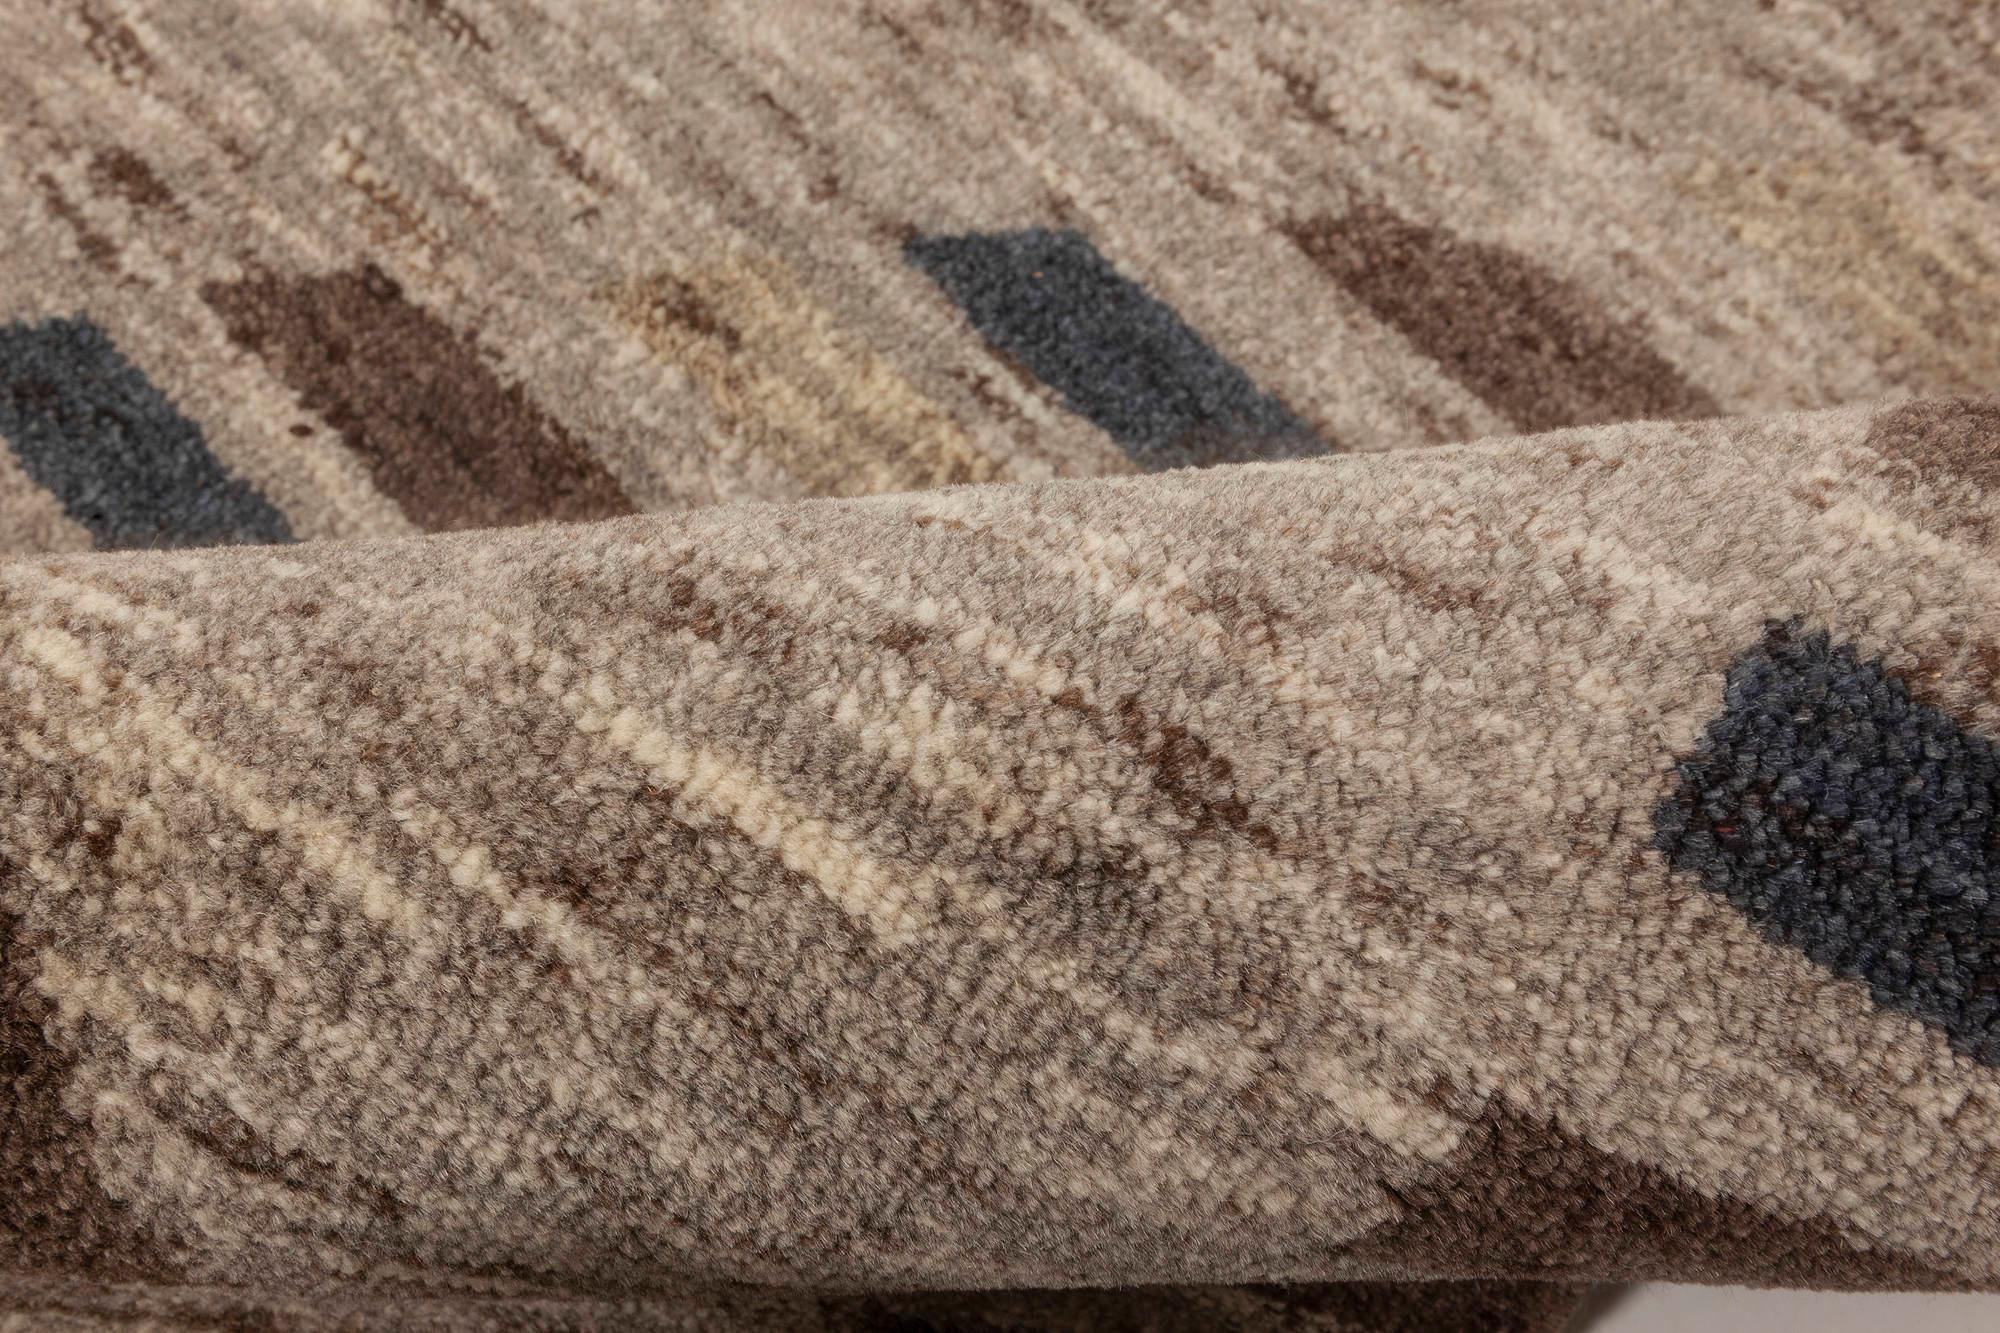 Contemporary Abstract design handmade wool rug by Doris Leslie Blau.
Size: 13'0